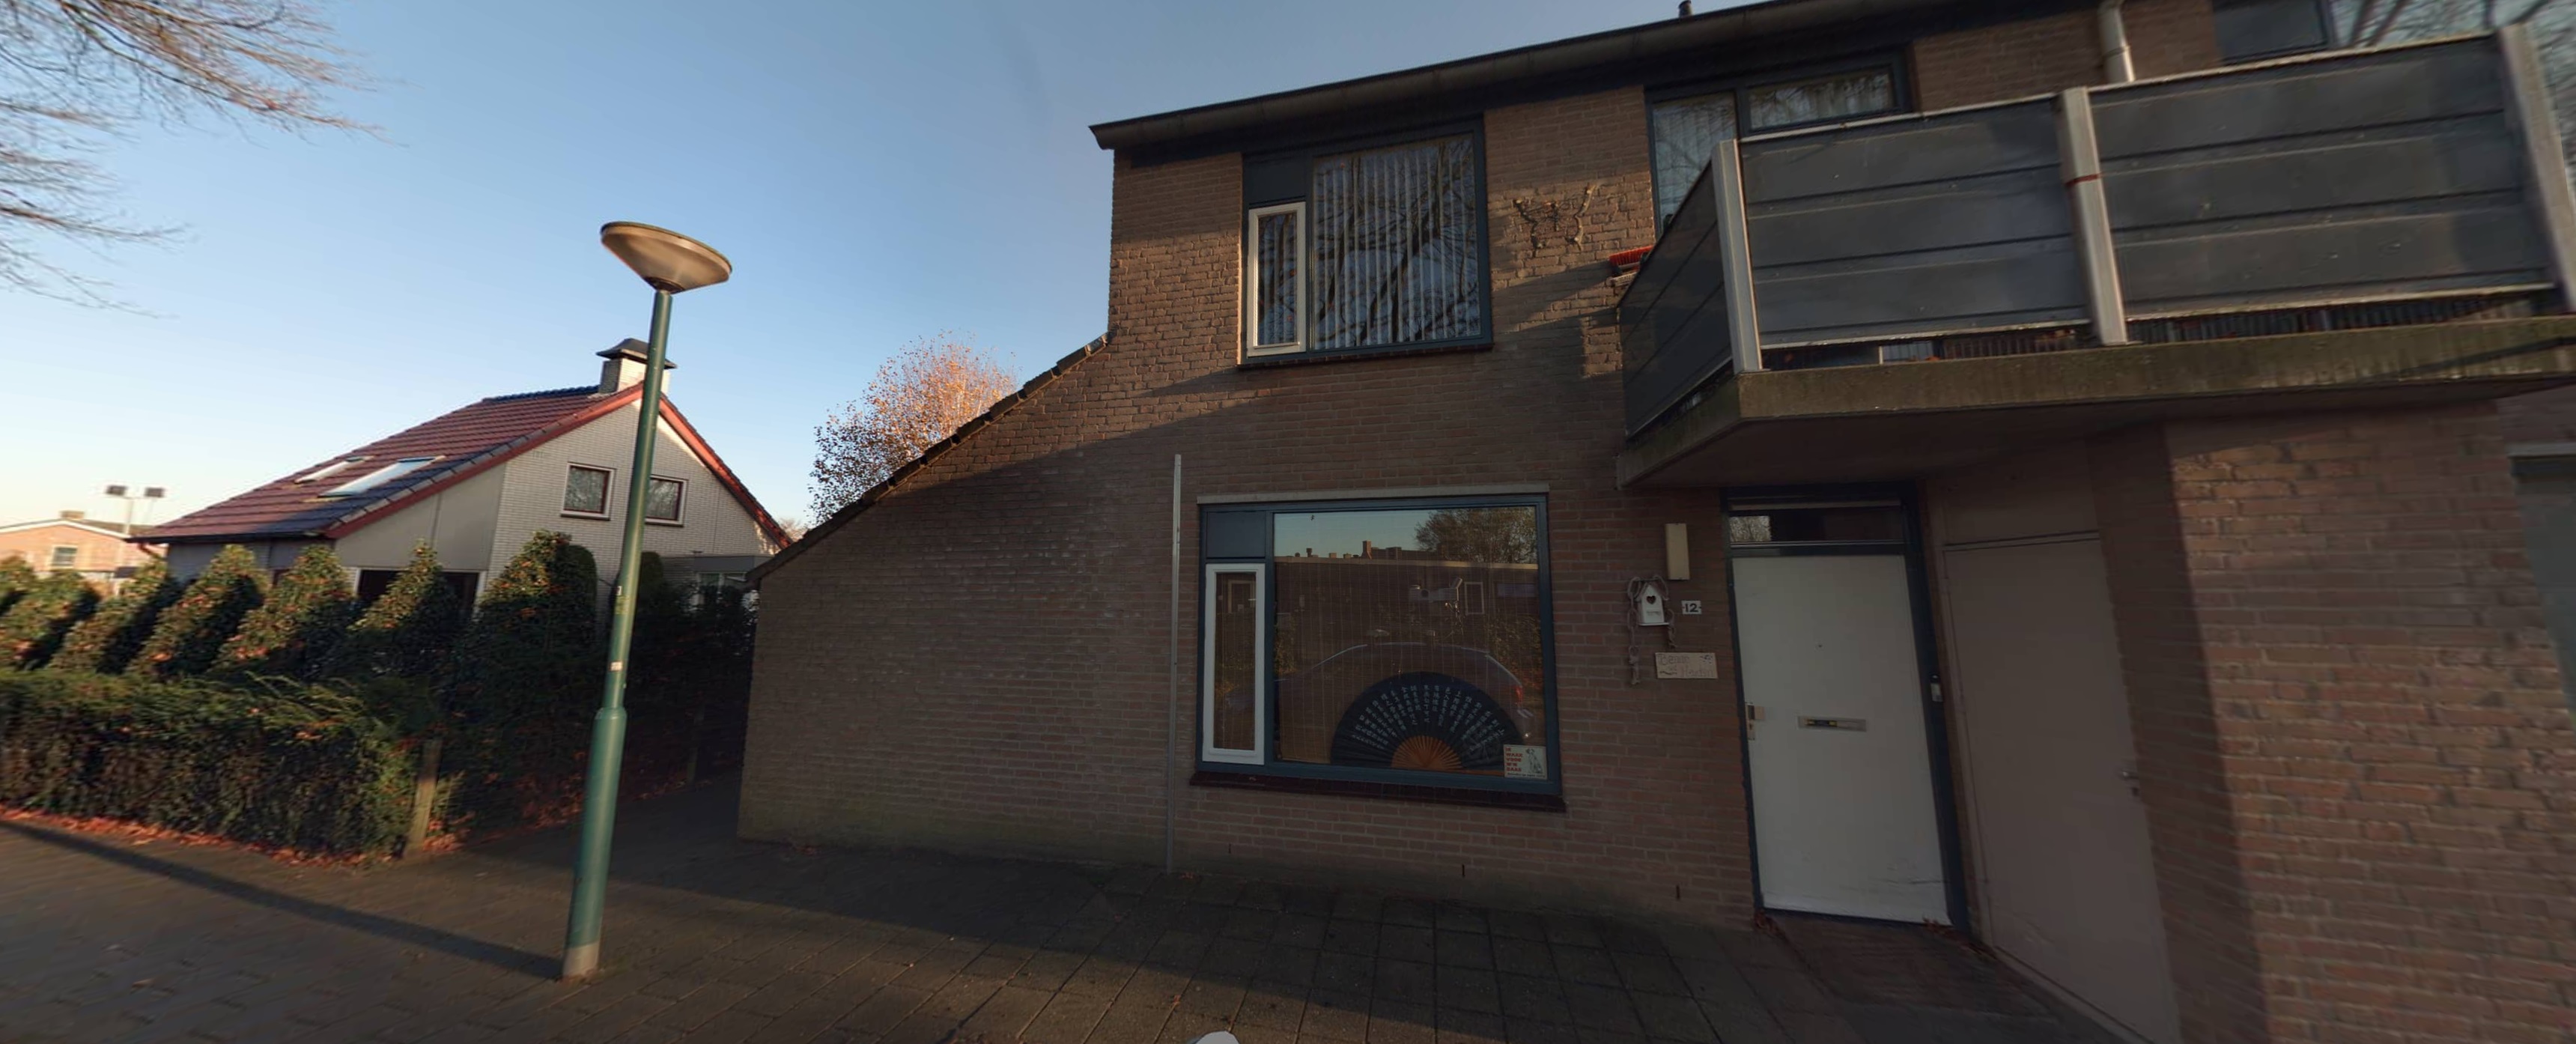 Graafschap 22, 5431 DE Cuijk, Nederland